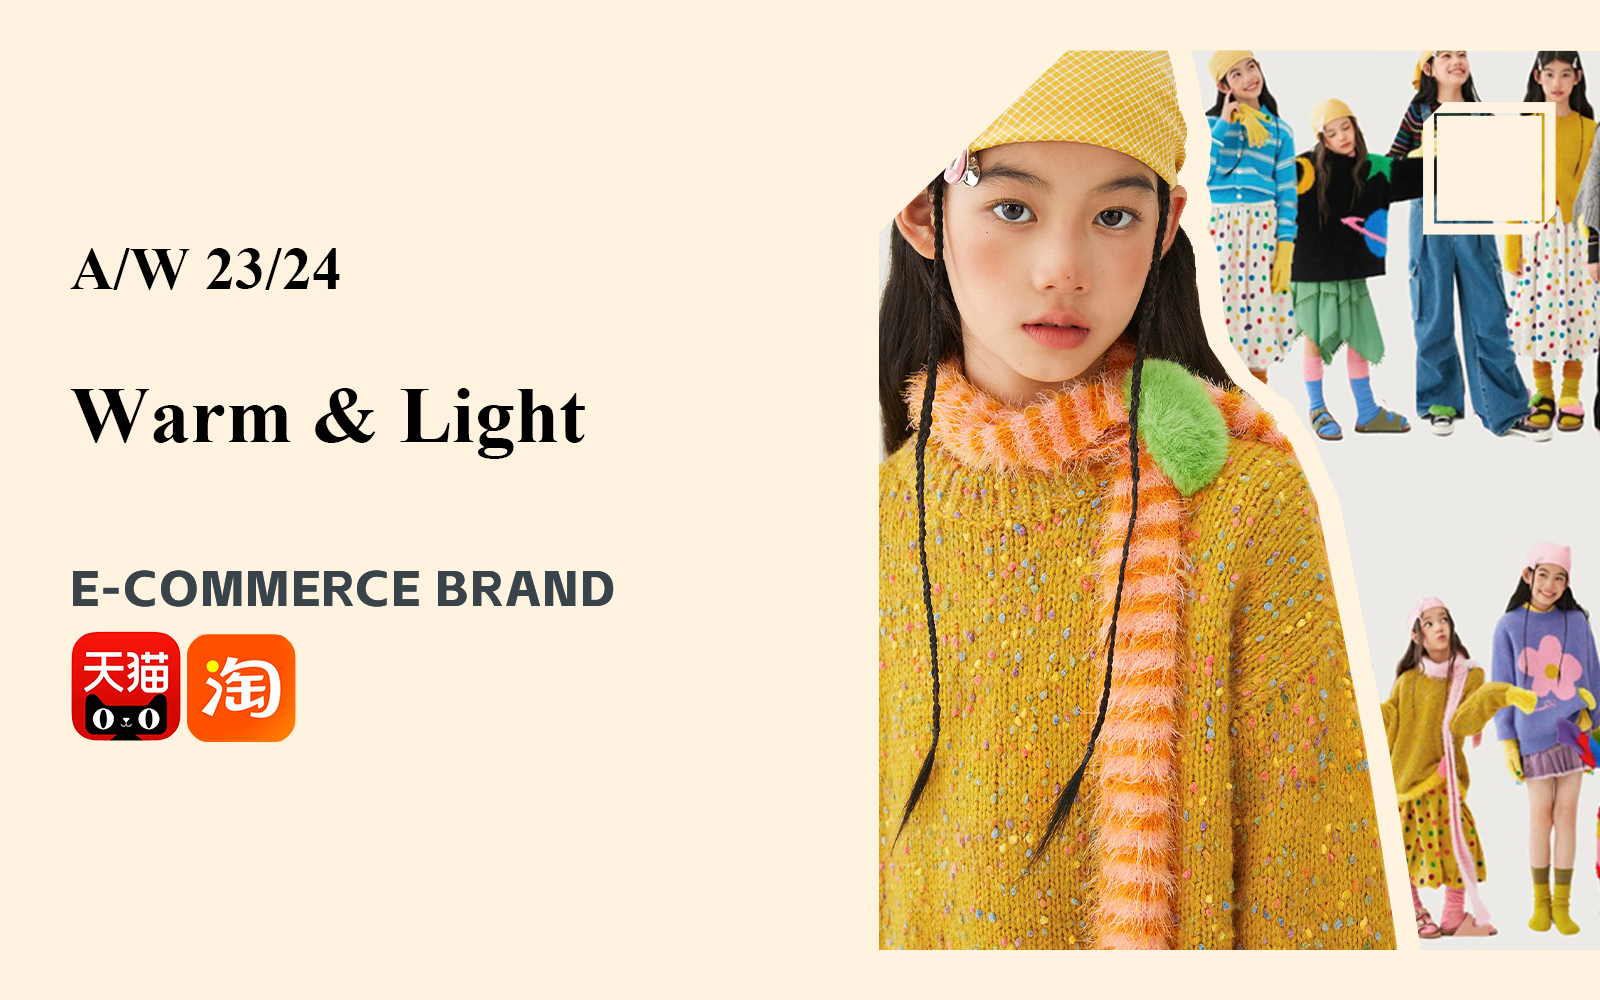 Warm & Light -- The Comprehensive Analysis of E-commerce Kidswear Brand